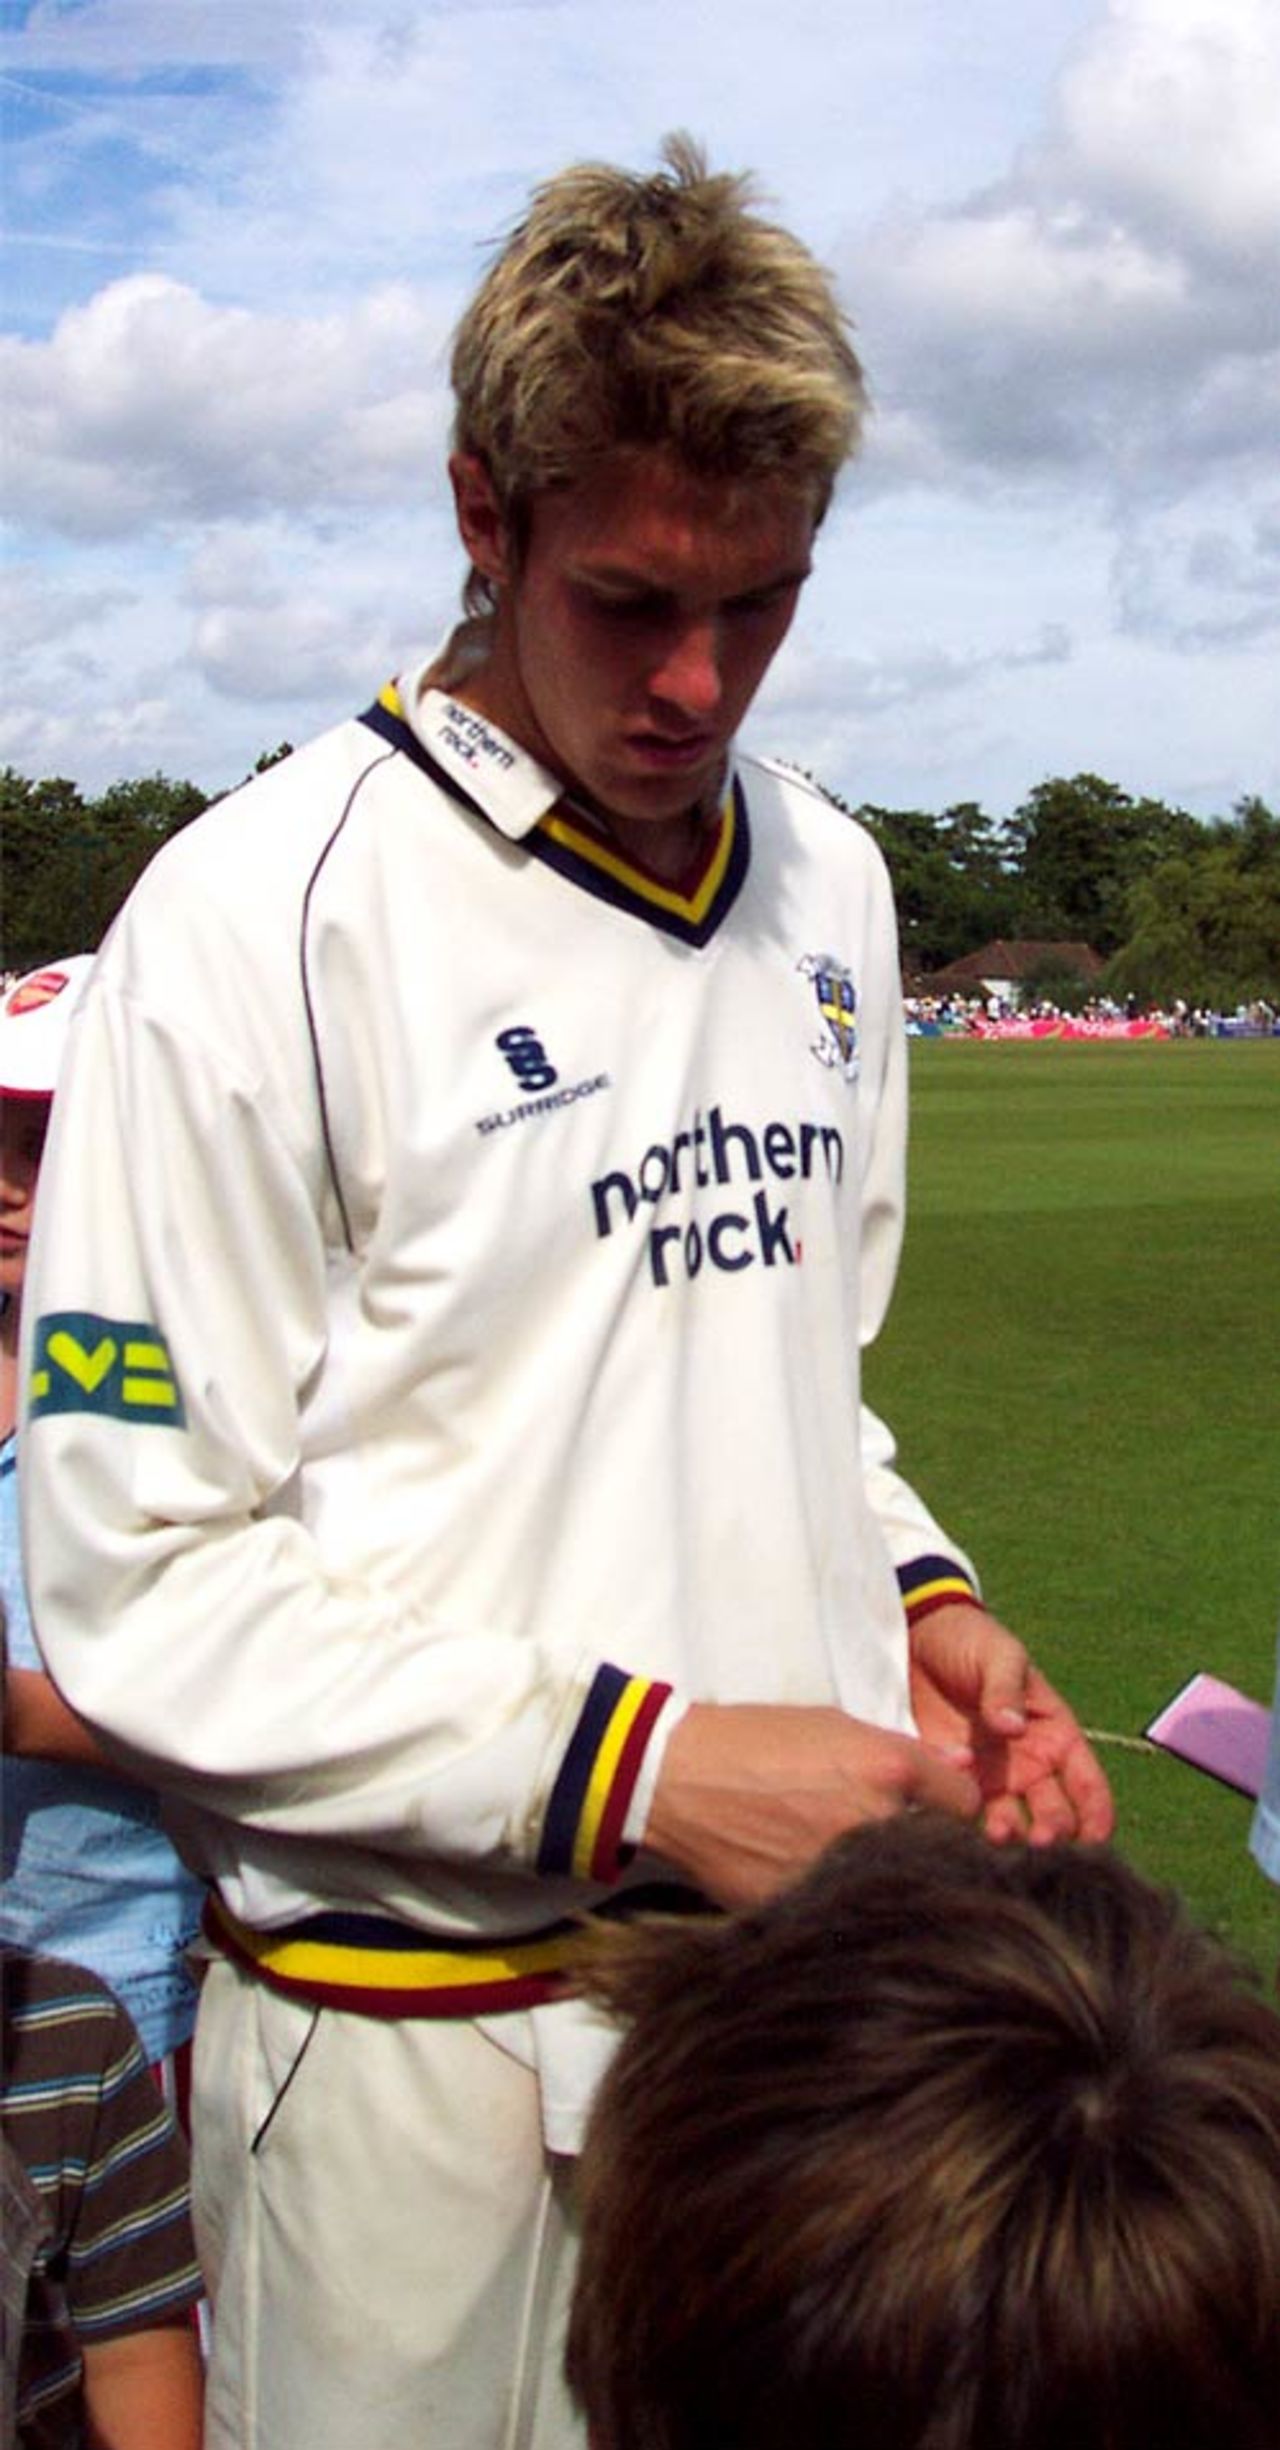 Ben Harmison signs autographs during the lunch interval, Sussex v Durham, Horsham, July 14, 2007